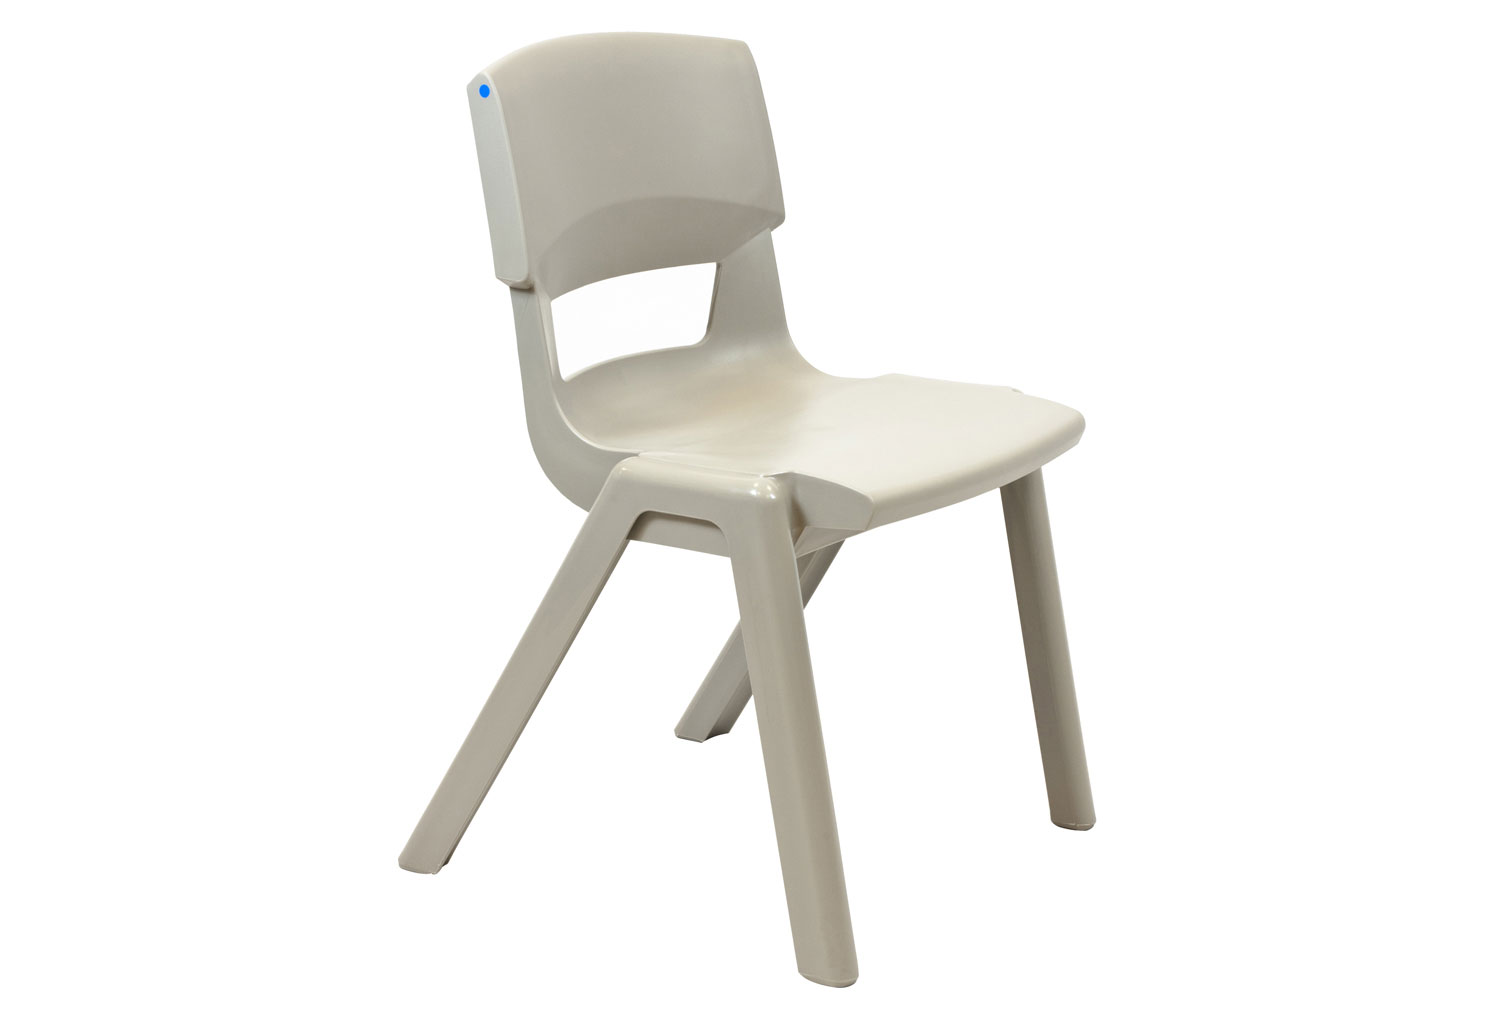 Qty 10 - Postura+ Classroom Chair, 14+ Years - 38wx37dx46h (cm), Ash Grey